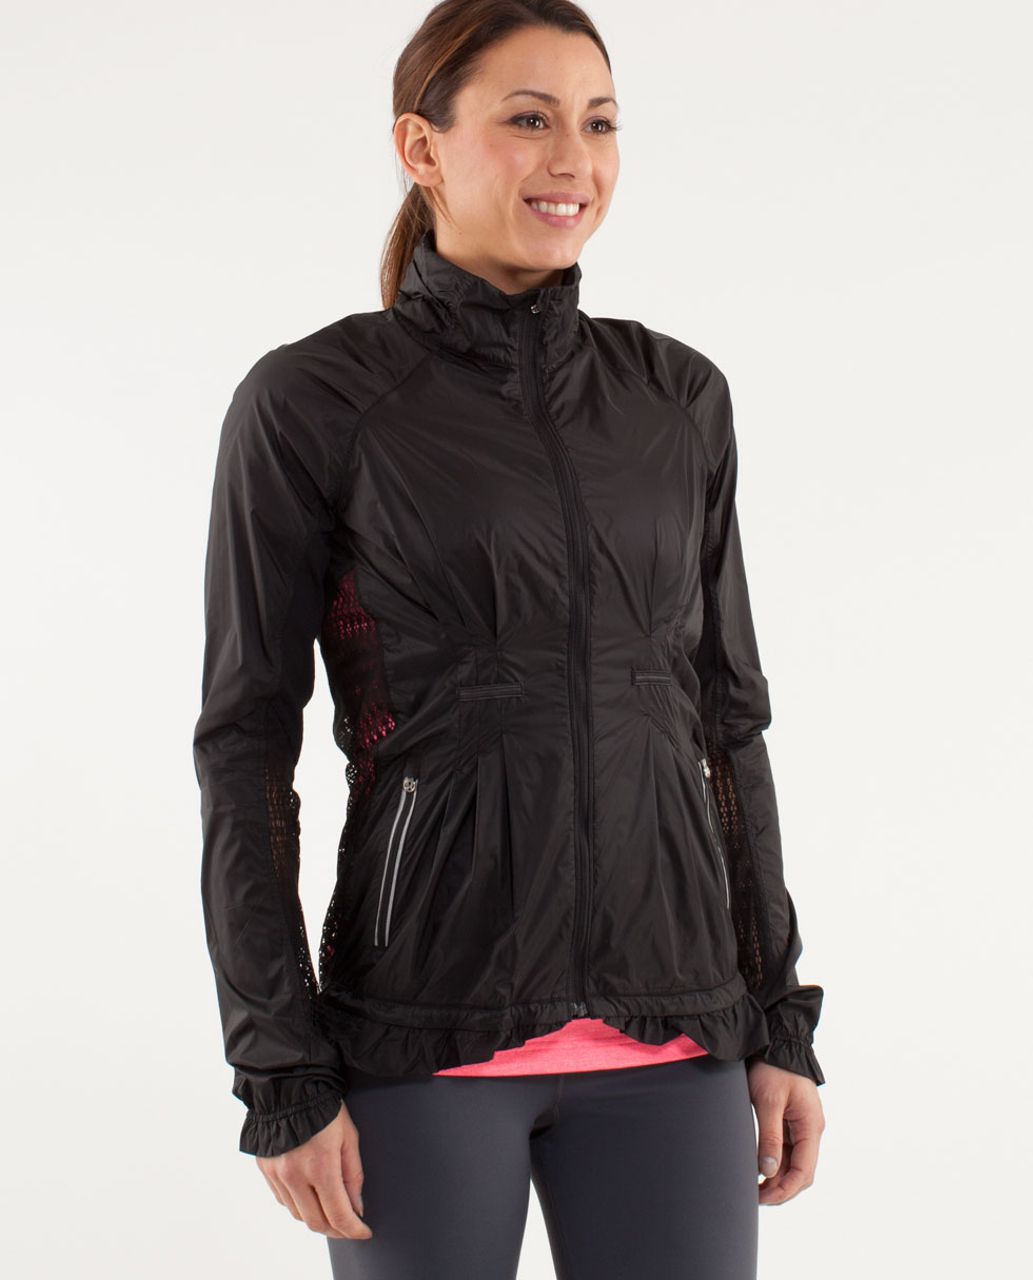 lululemon women's running jacket